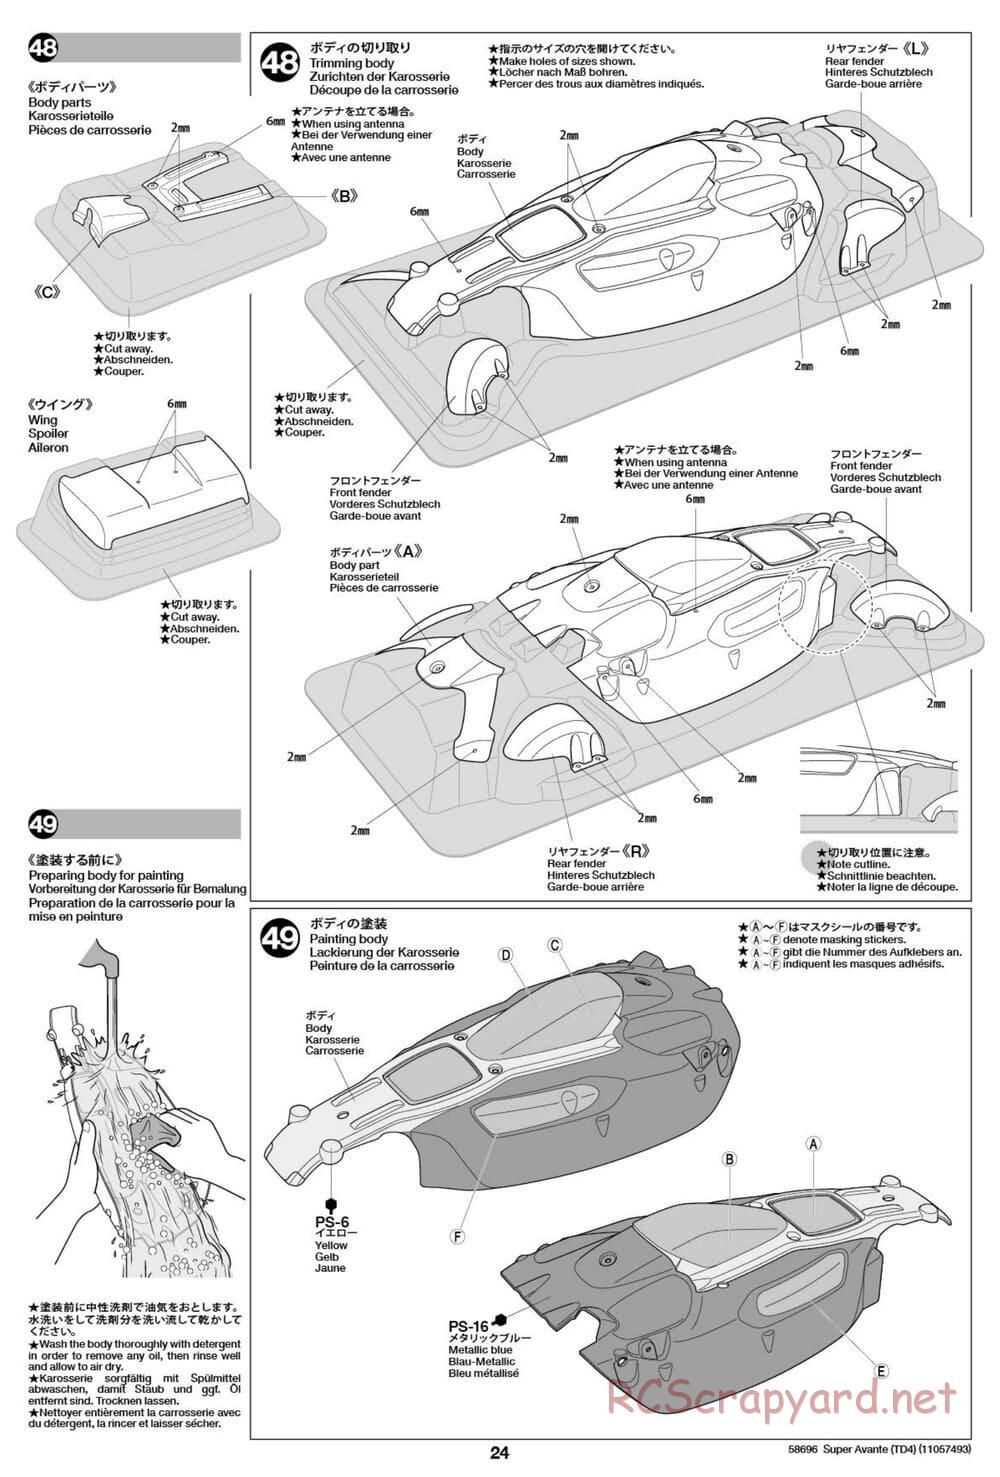 Tamiya - Super Avante - TD4 Chassis - Manual - Page 25